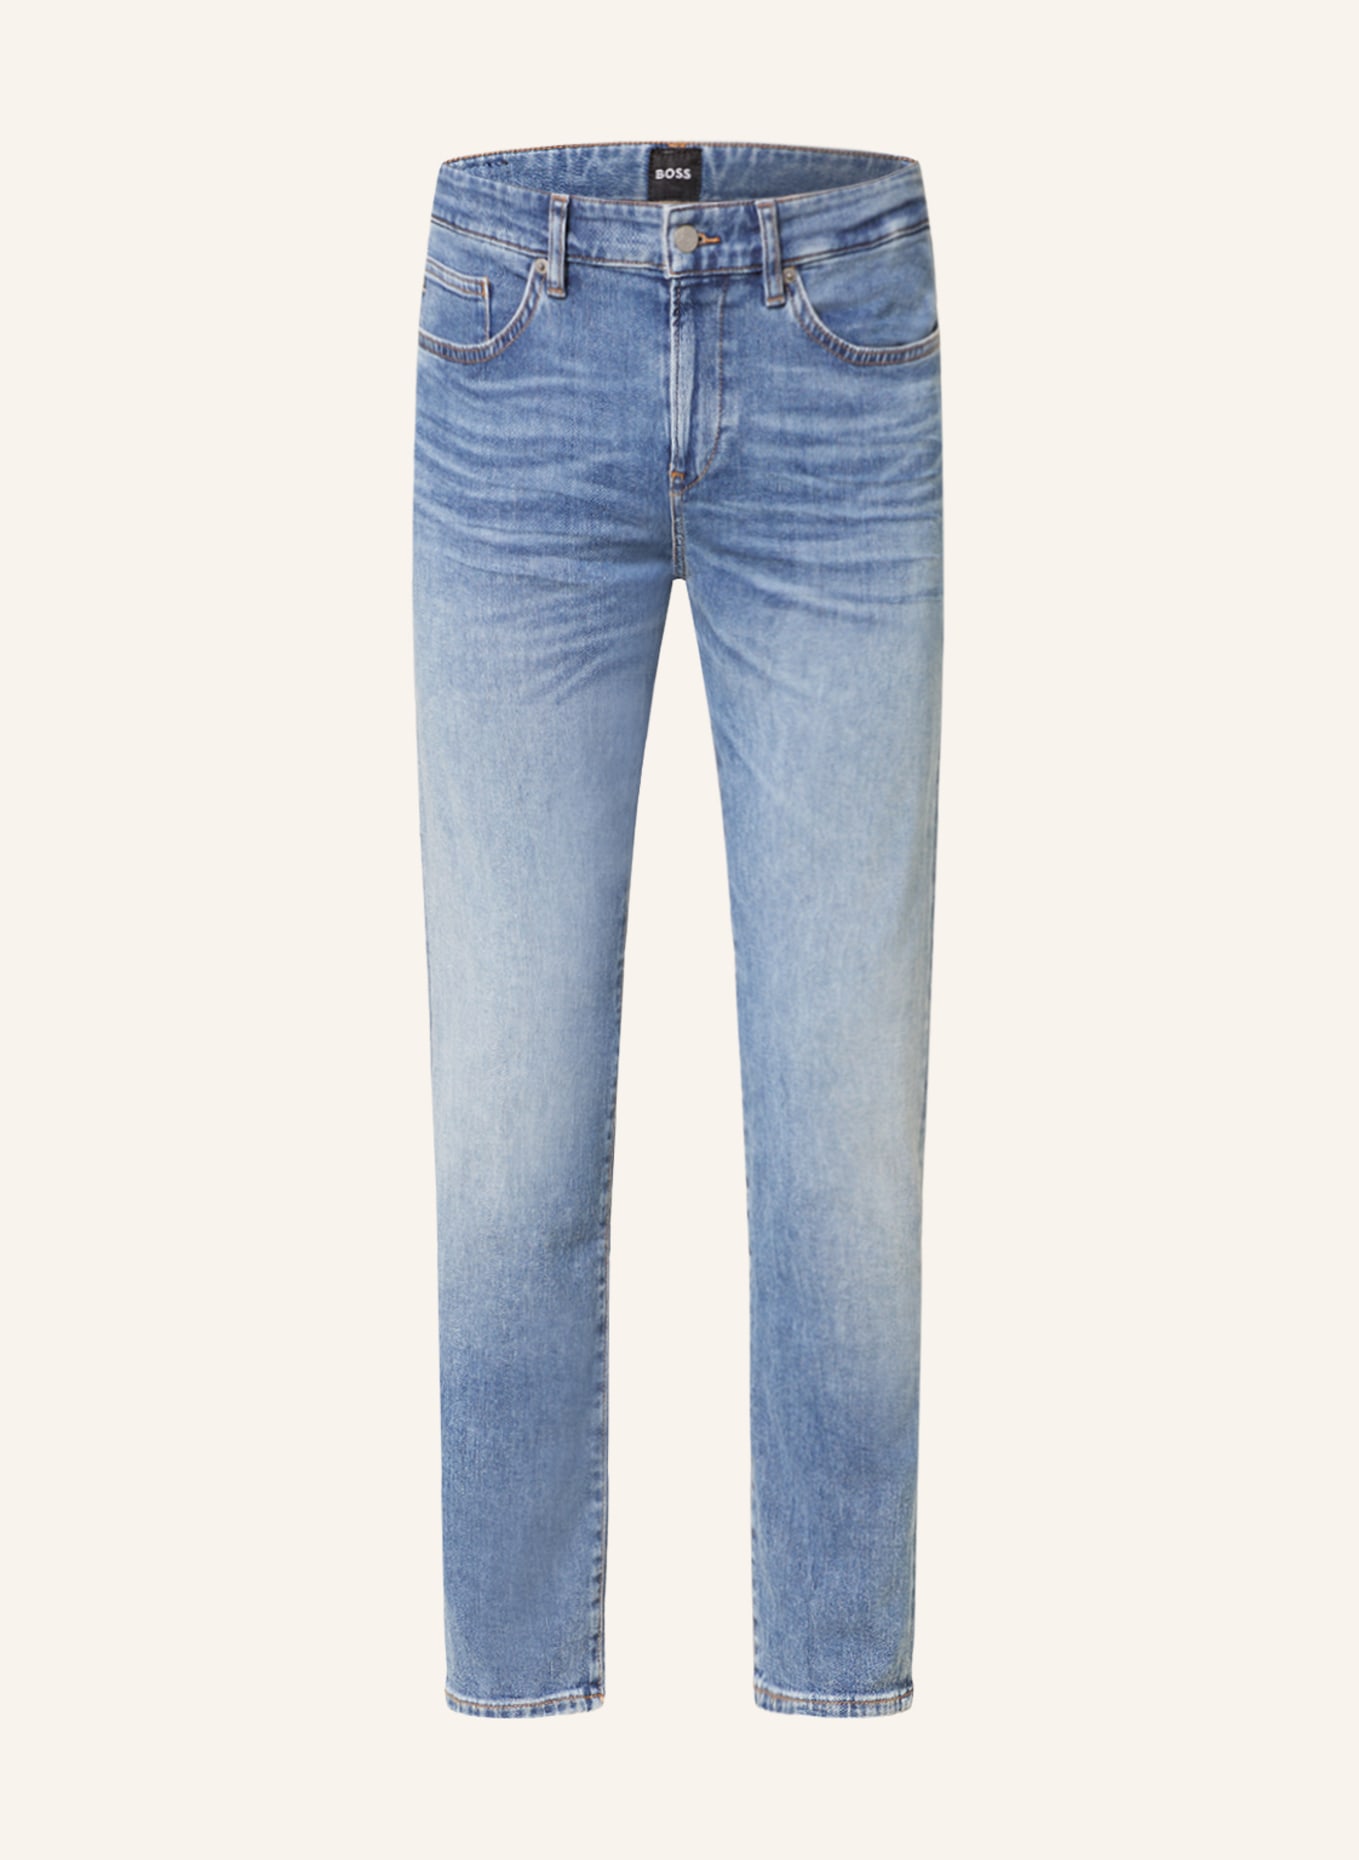 BOSS Jeans DELAWARE 3-1 Slim Fit, Farbe: 448 TURQUOISE/AQUA (Bild 1)